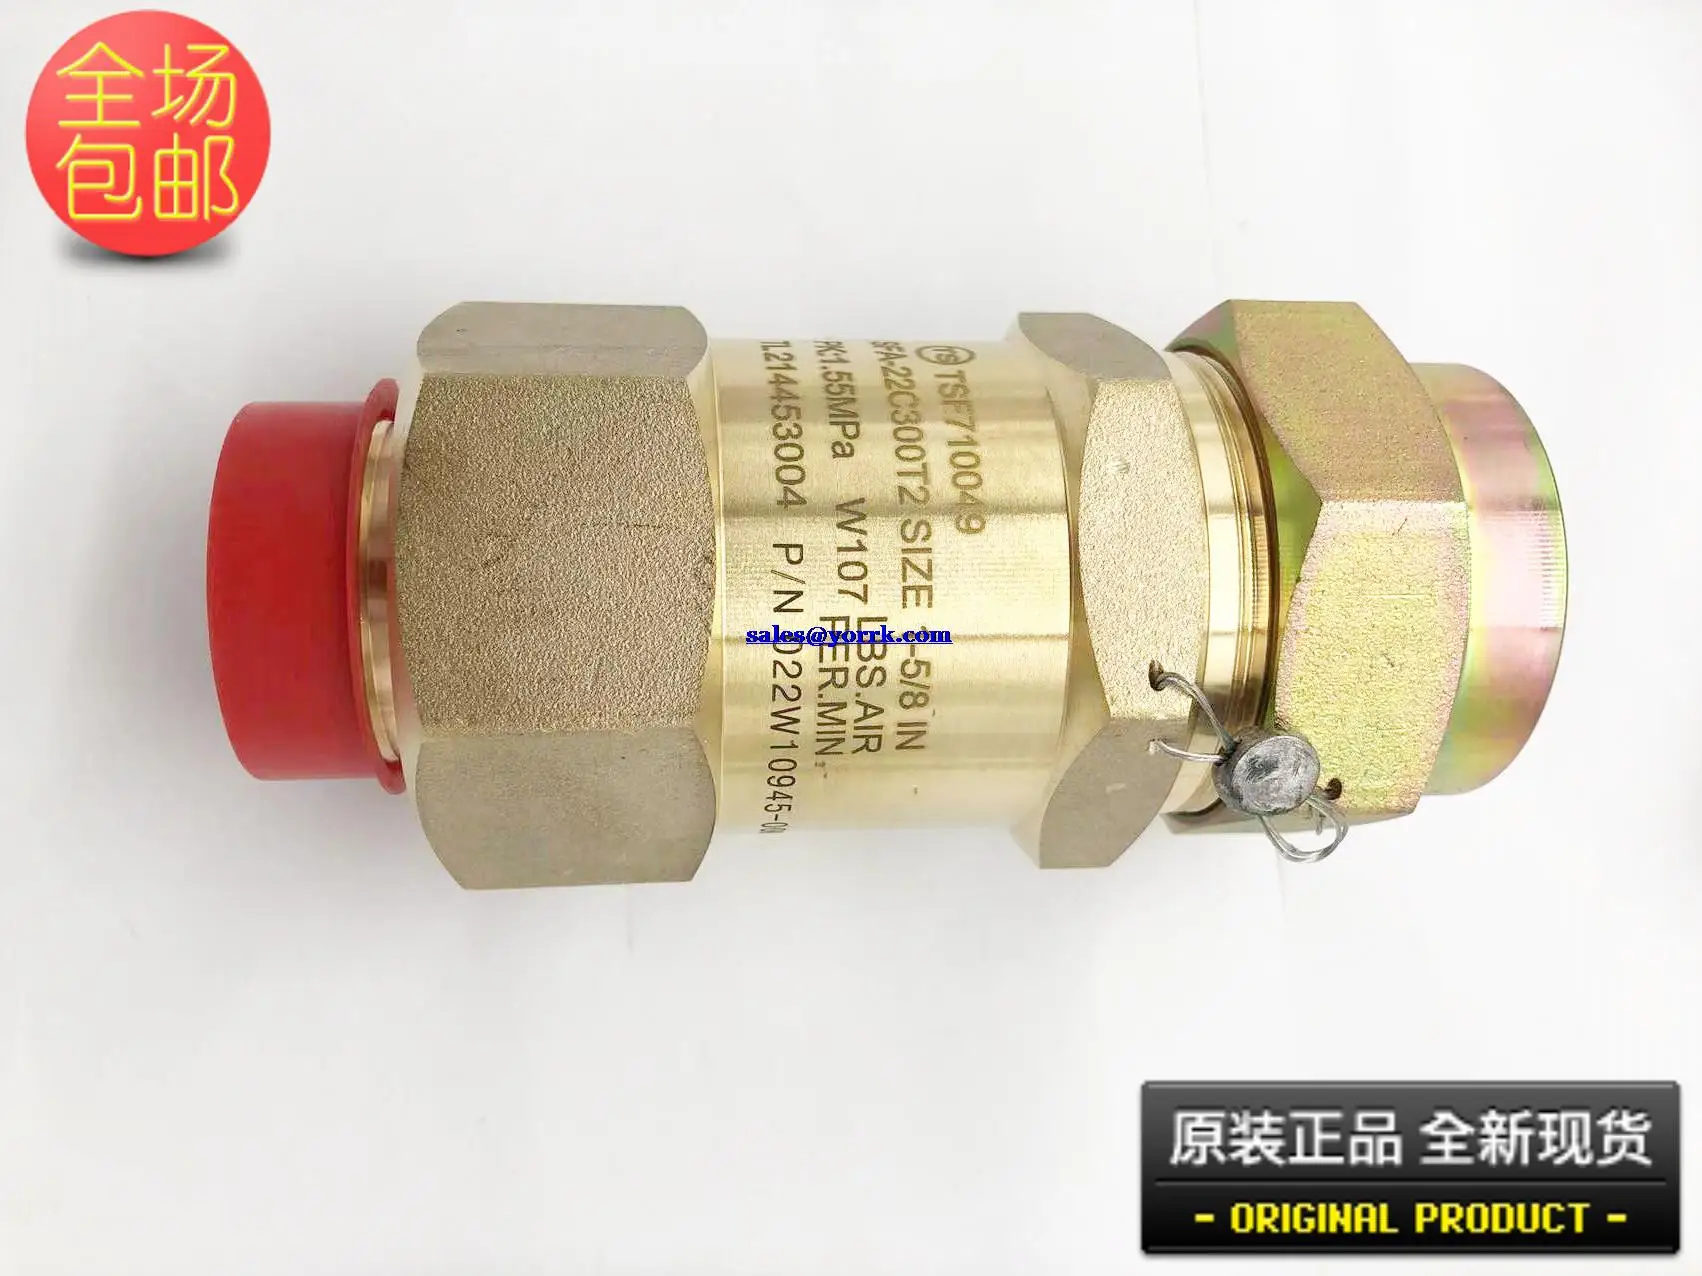 

022 w10945-000 safety valve 1.55 M industrial refrigeration compressor valve metal valves valve